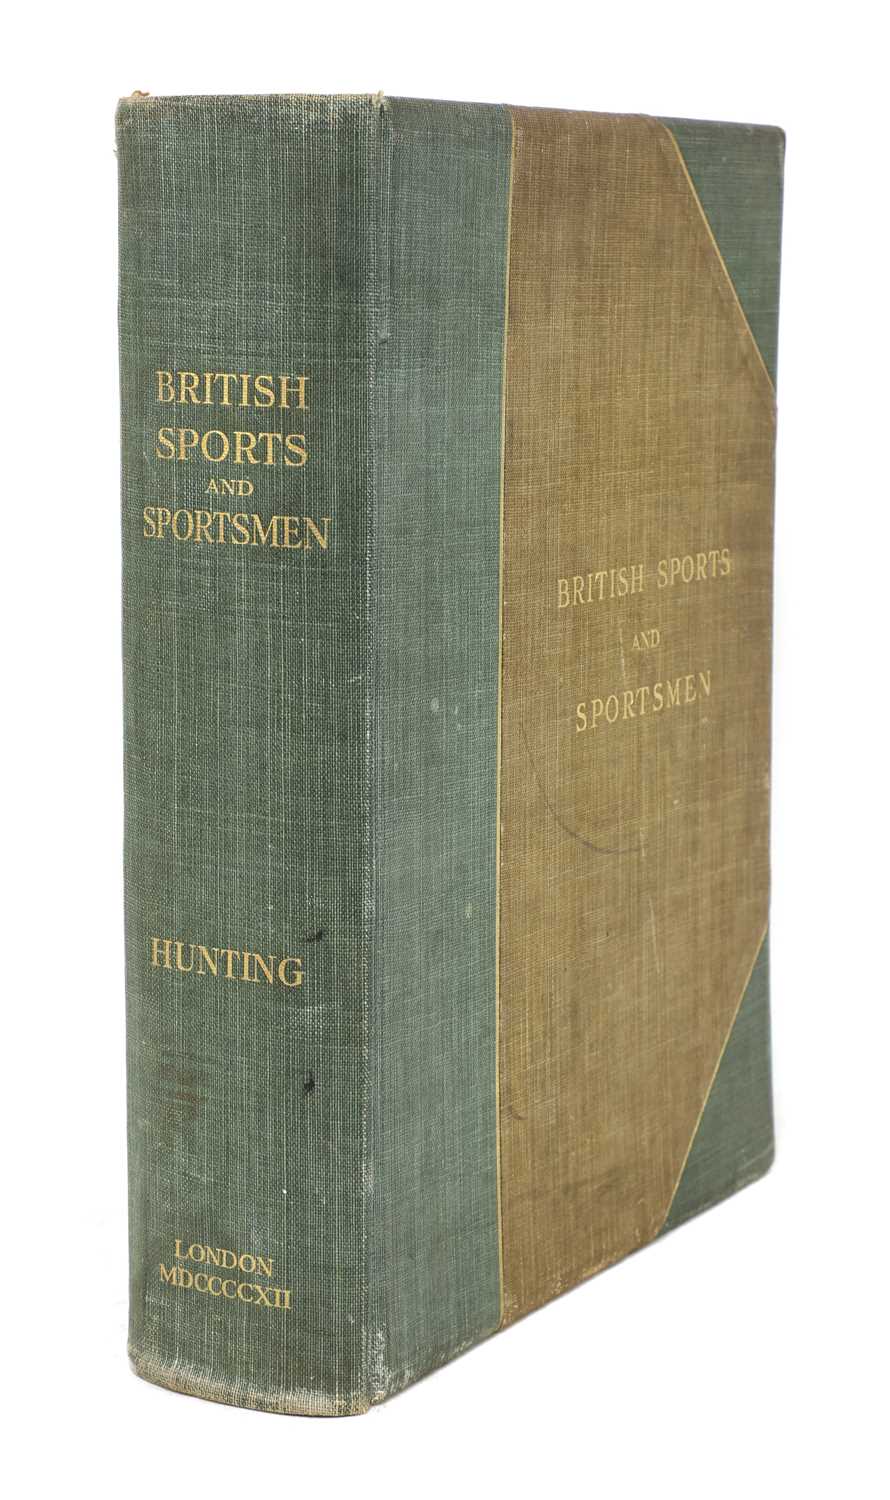 Lot 75 - 'British Sports and Sportsmen, Hunting'